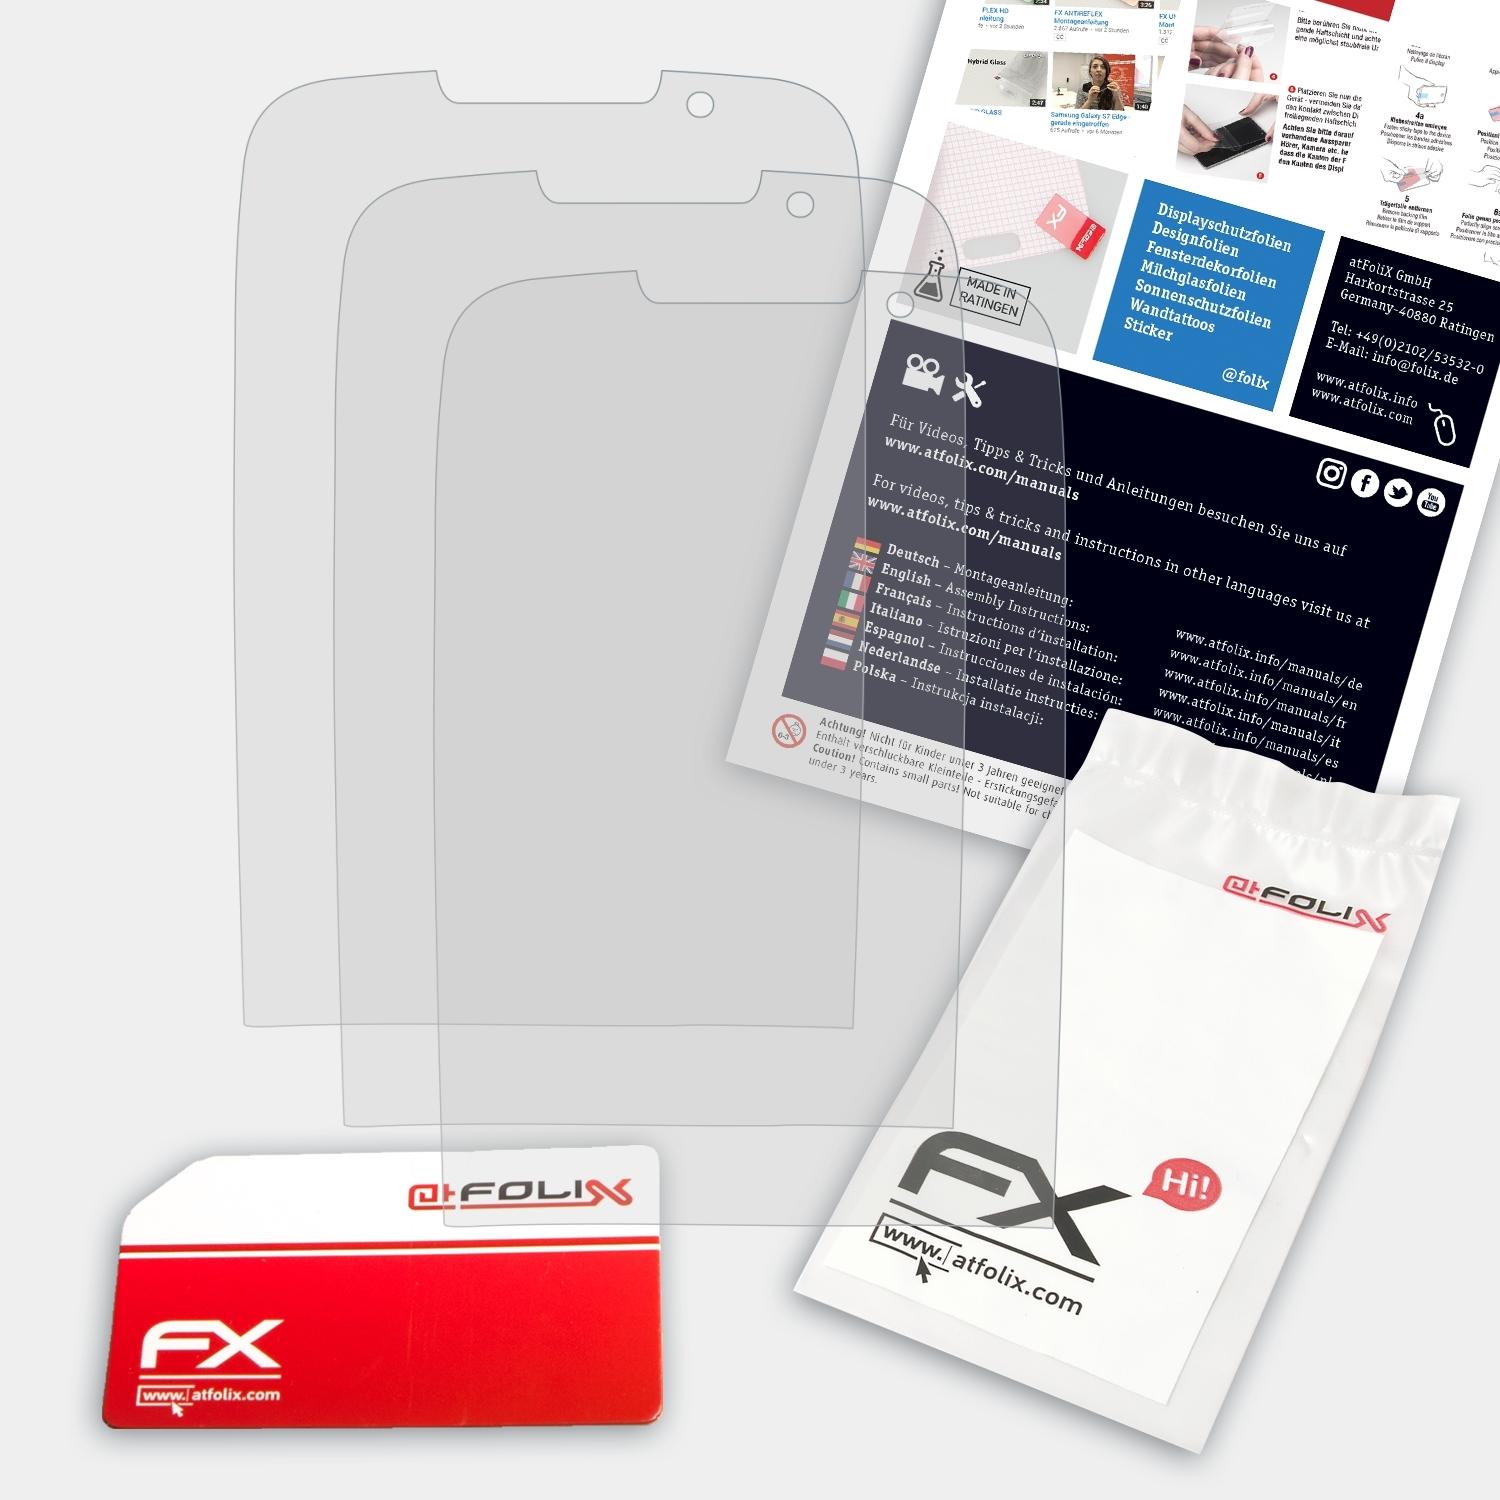 ATFOLIX Displayschutz(für 3x 6303i Classic) Nokia FX-Antireflex